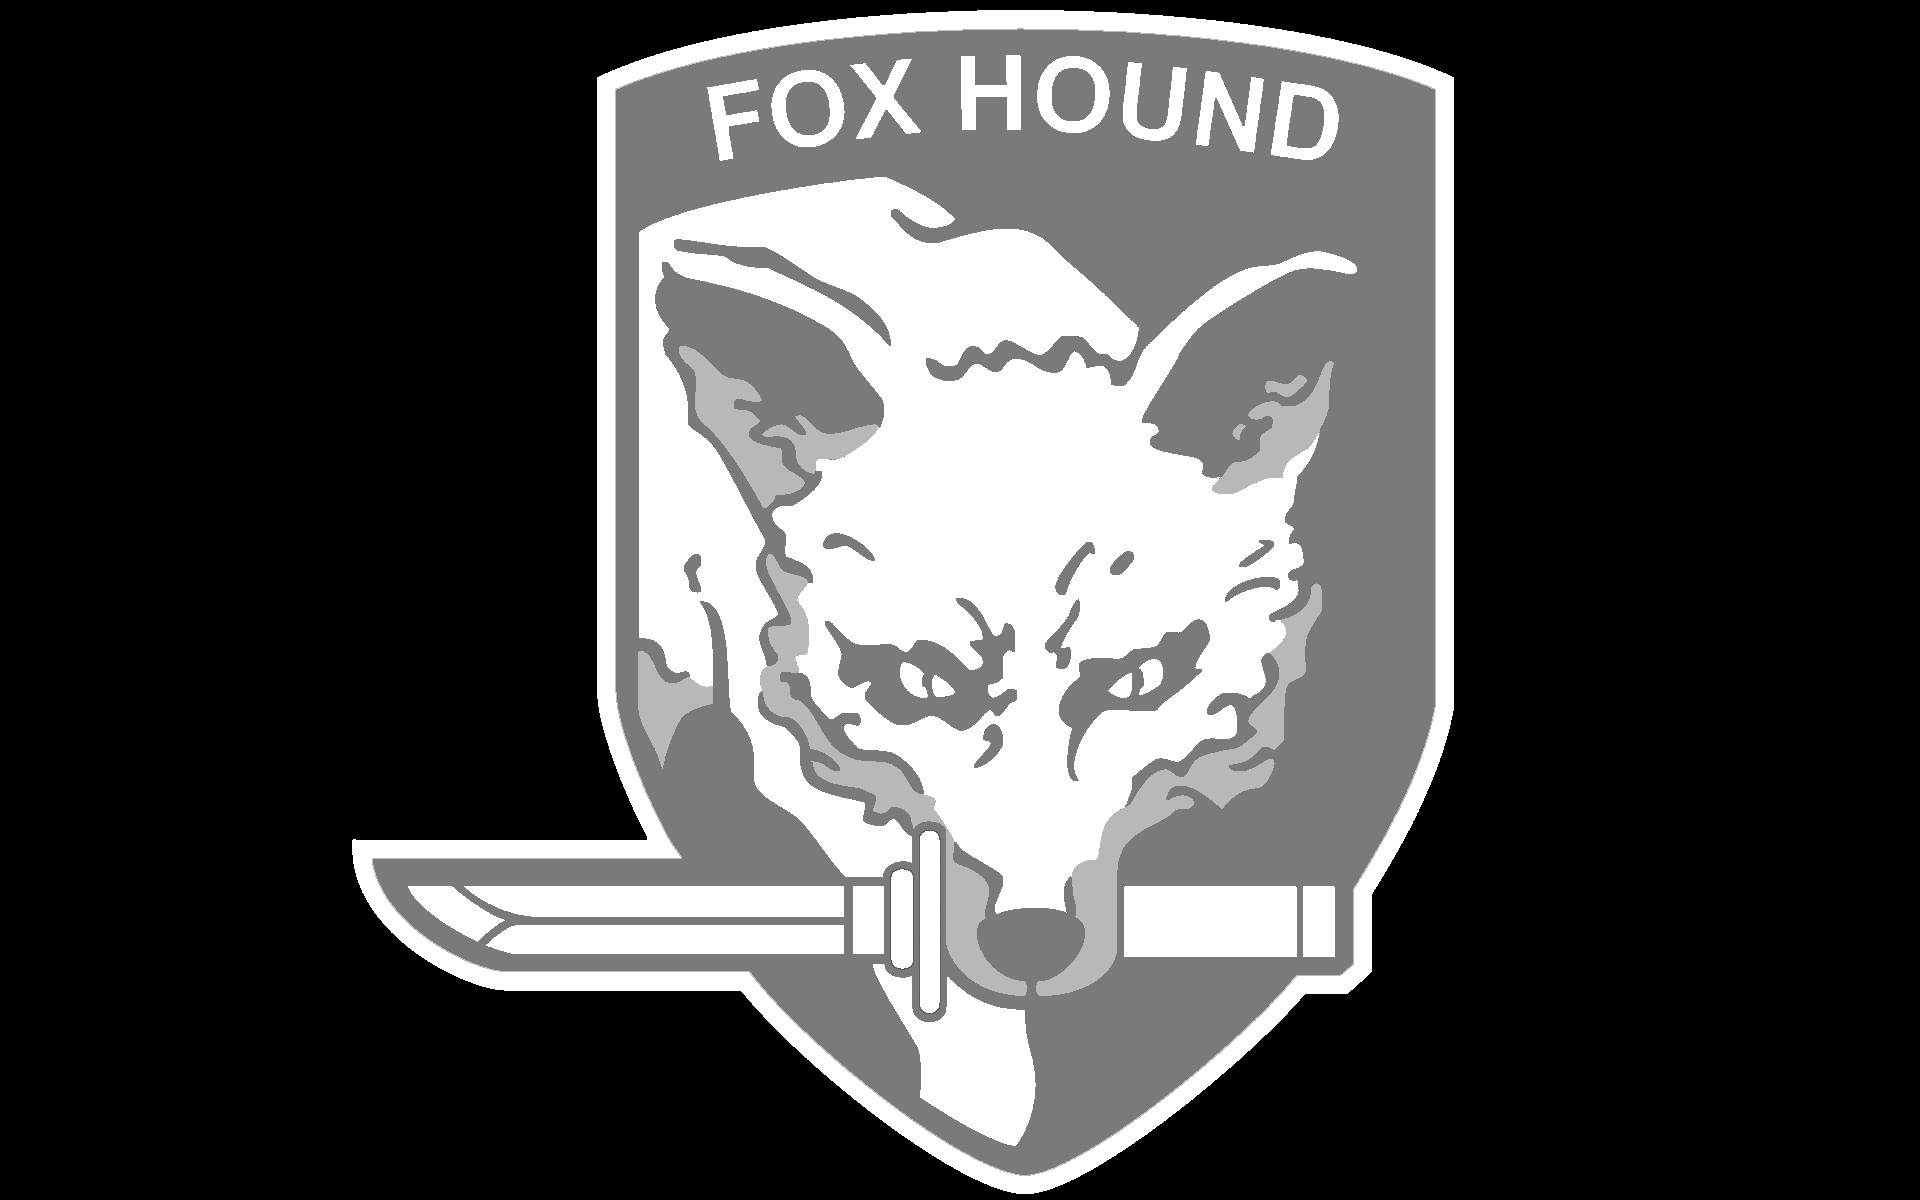 Fox hound. Foxhound Metal Gear. Metal Gear Solid Foxhound. Foxhound MGS нашивка. Отряд фоксхаунд.